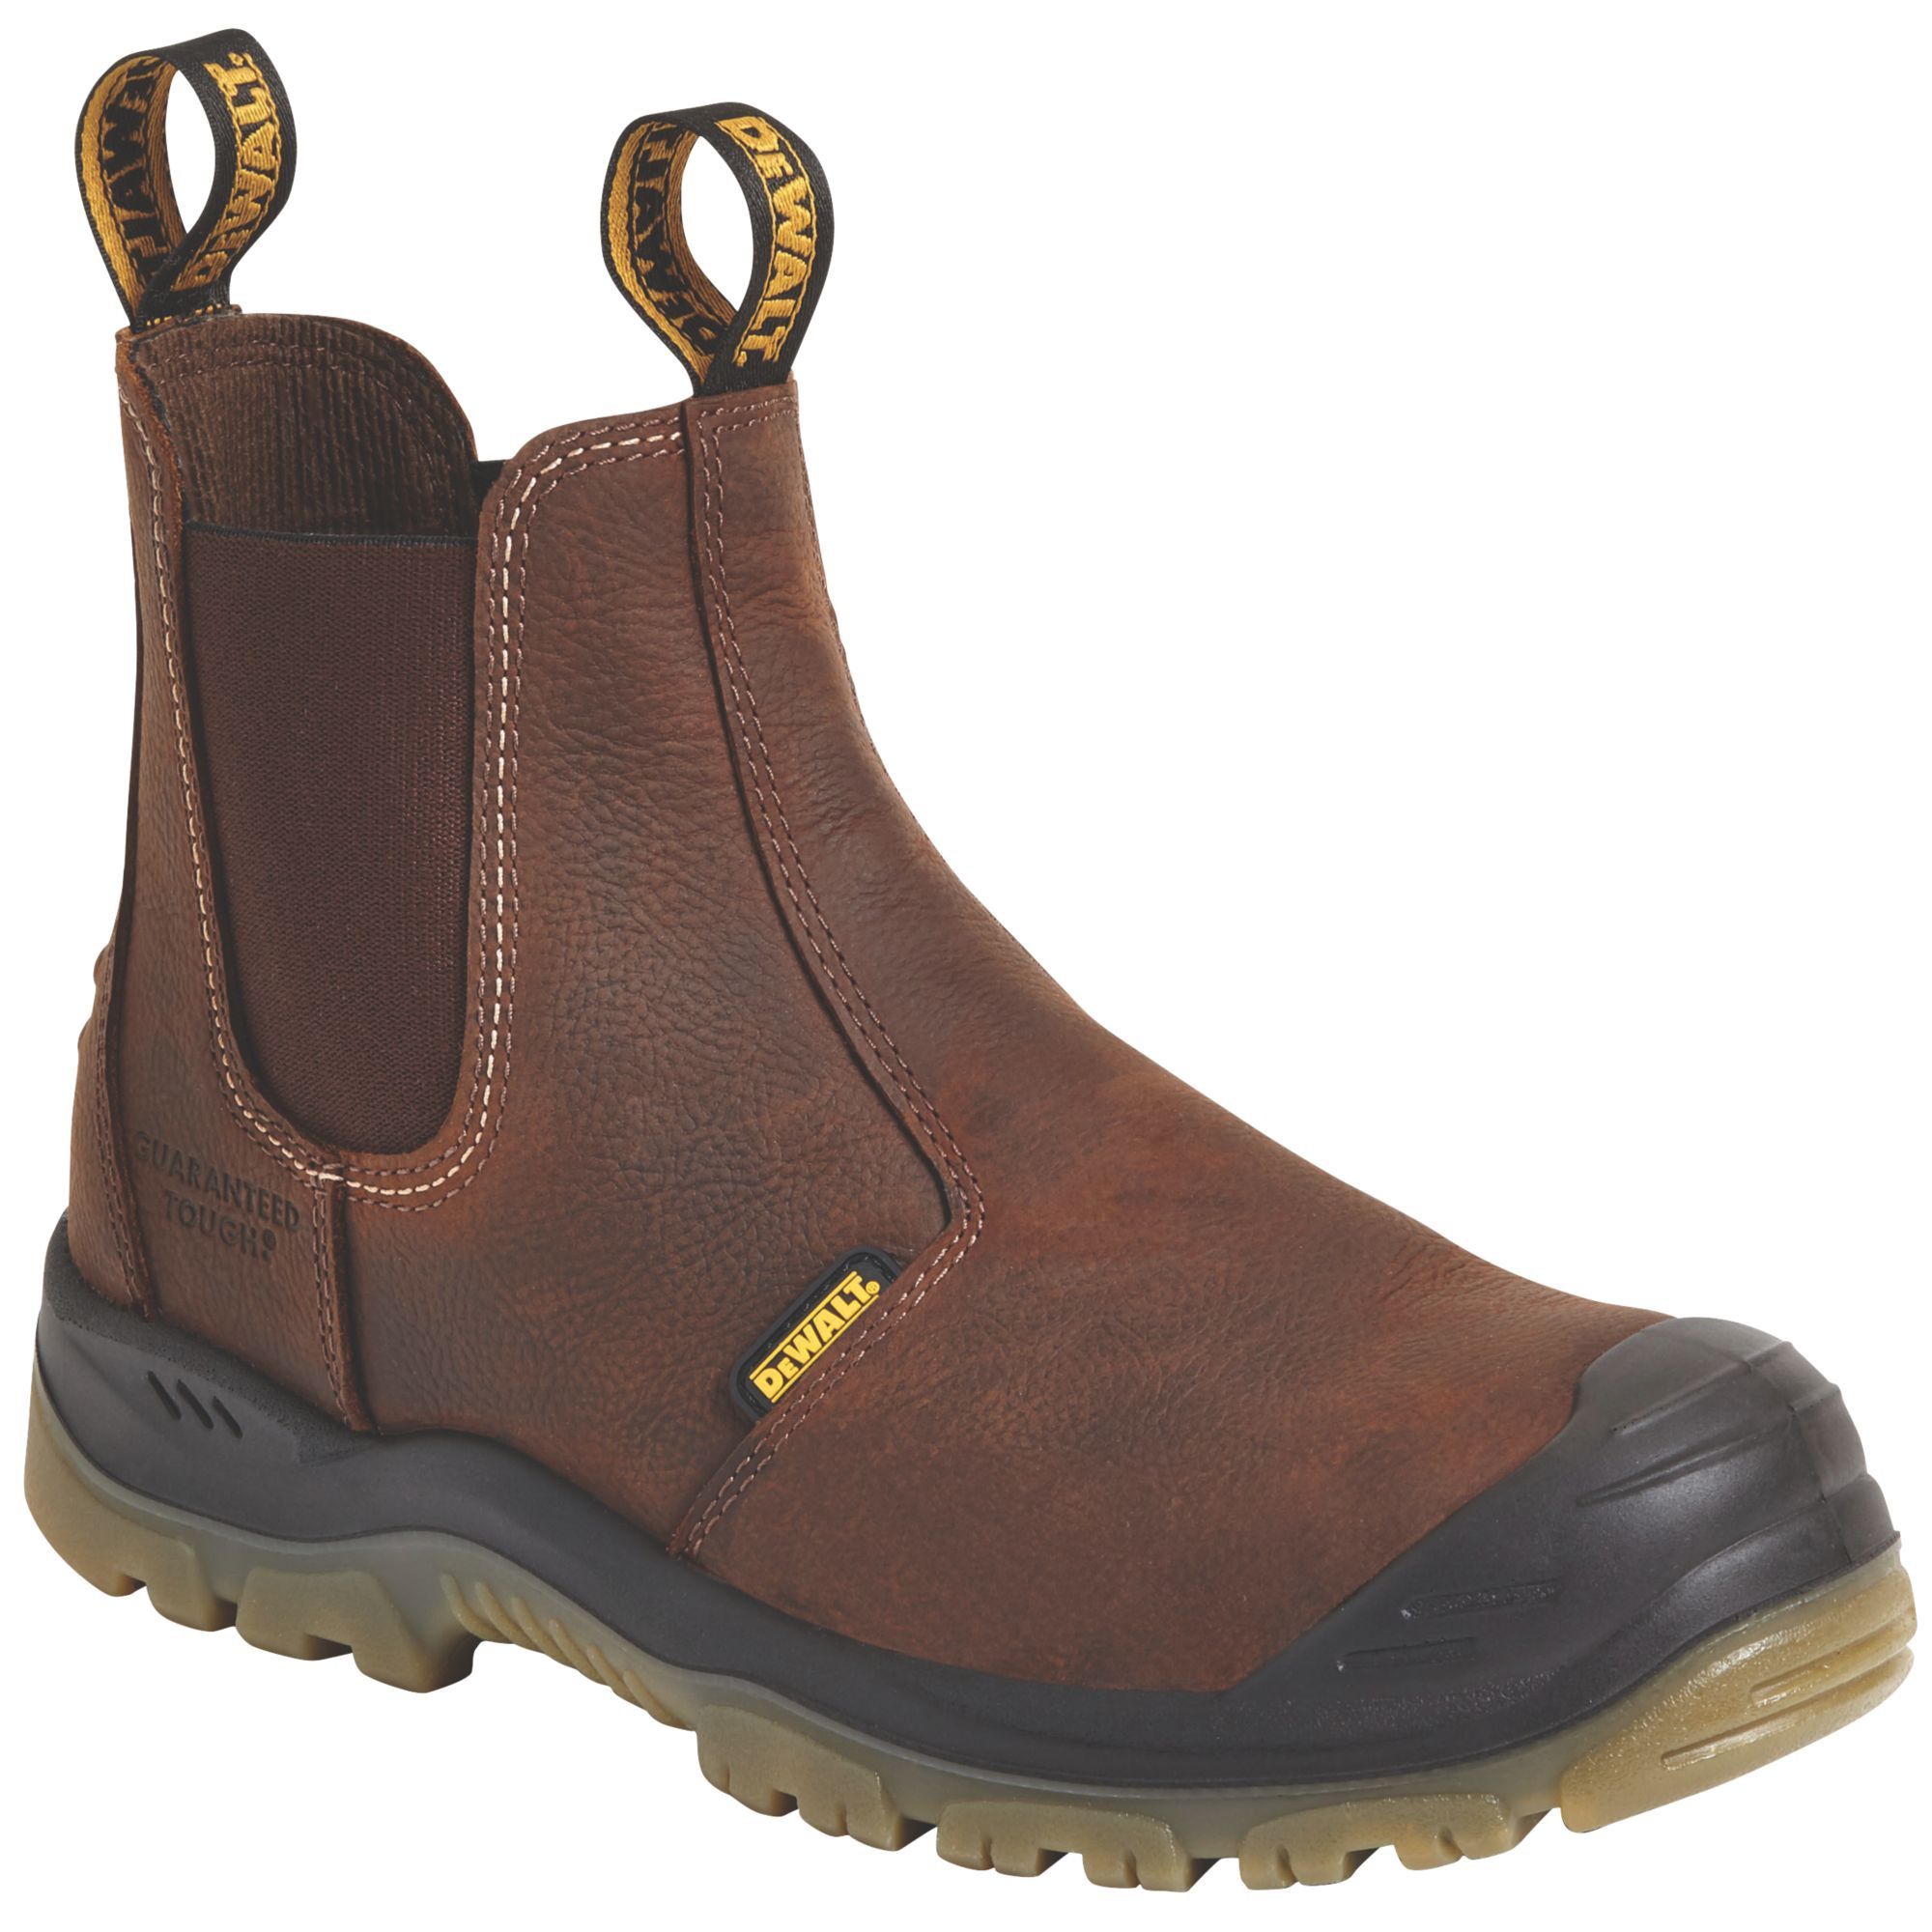 DeWalt Nitrogen Brown Dealer boots, Size 10